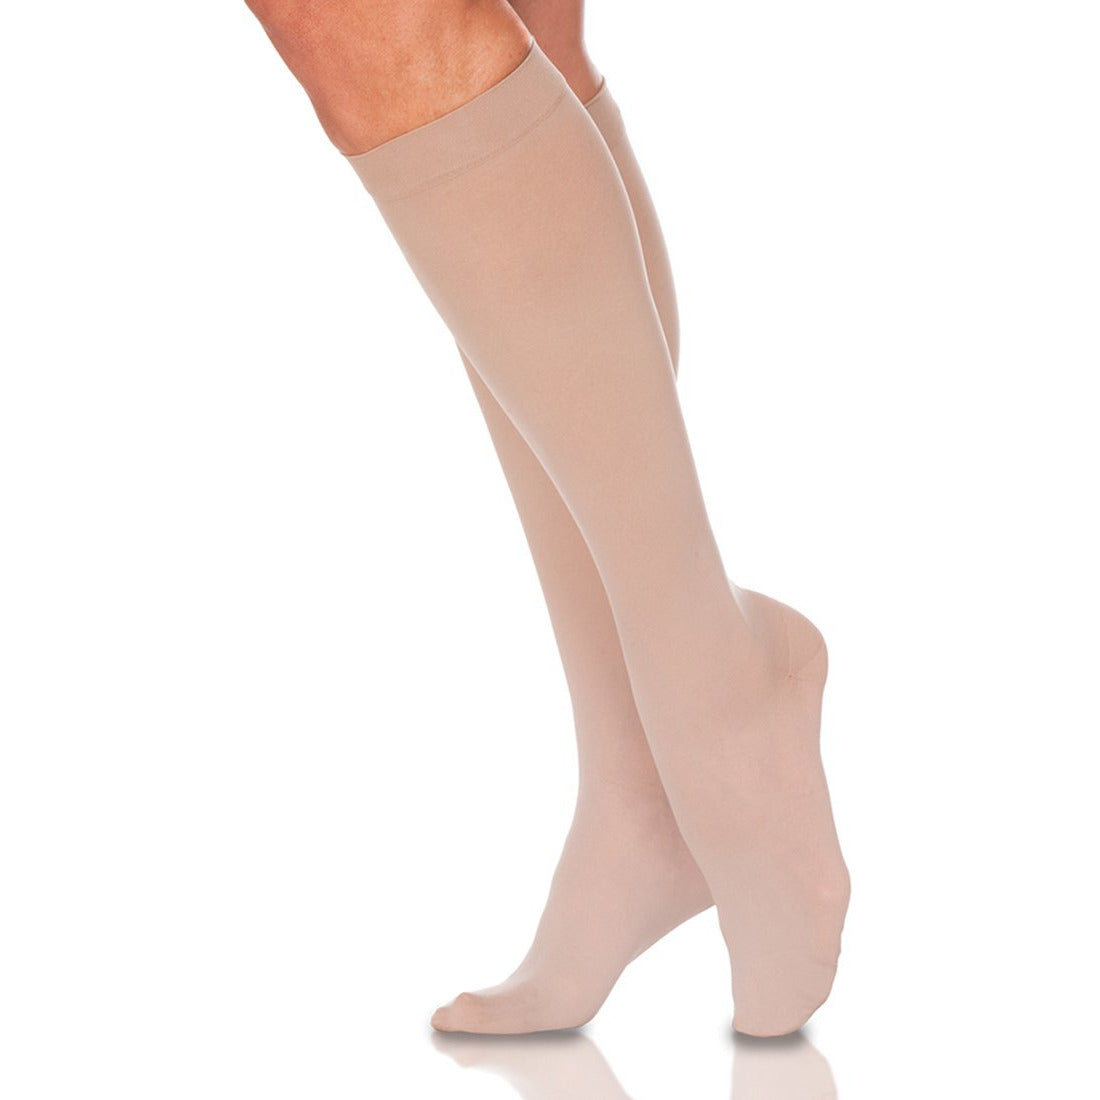 Sigvaris Crispa Knee High Compression Stockings W/ Grip Tops 20-30 mmHg 862C